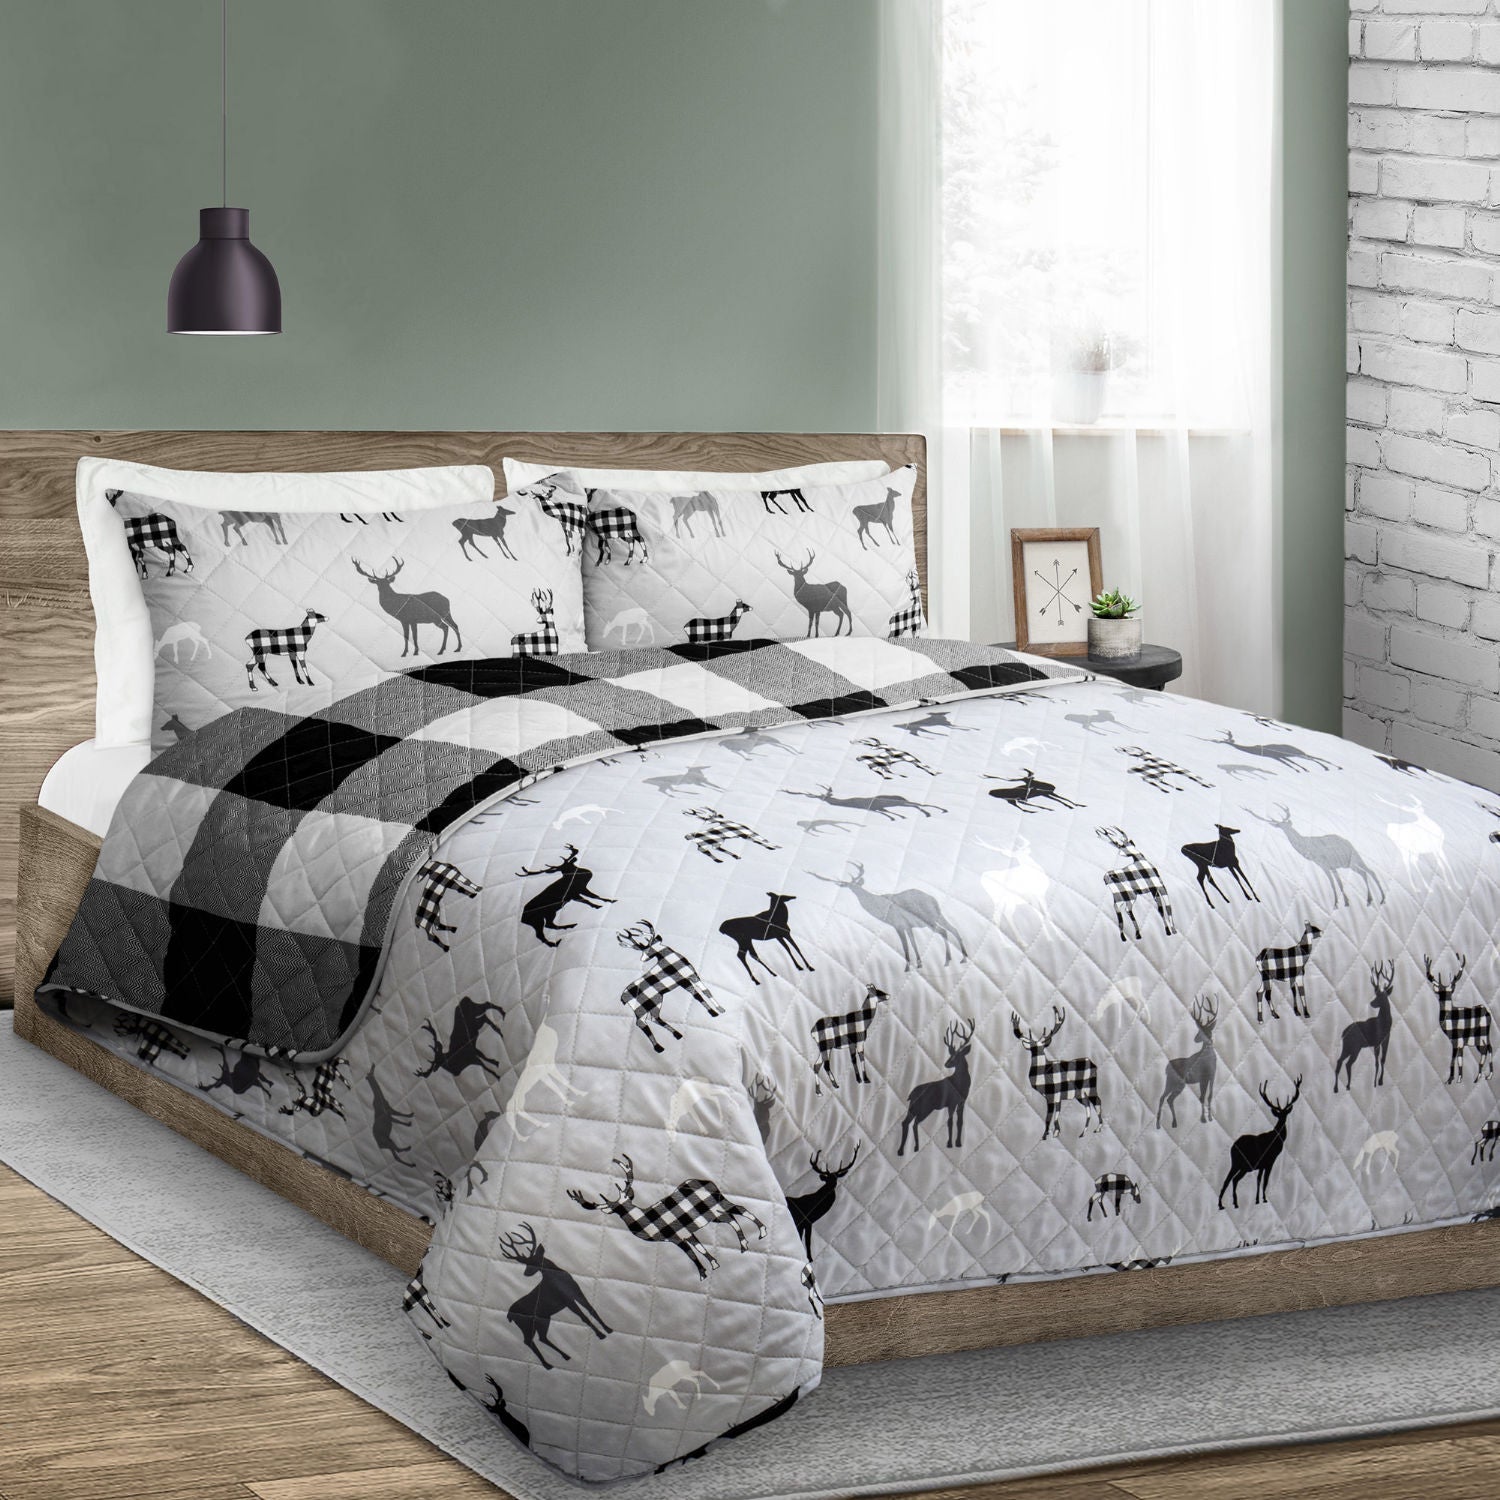 Reversible Printed Quilt Bedding Set 3 Piece King 104X92 Grey Deer Rustic Cabin